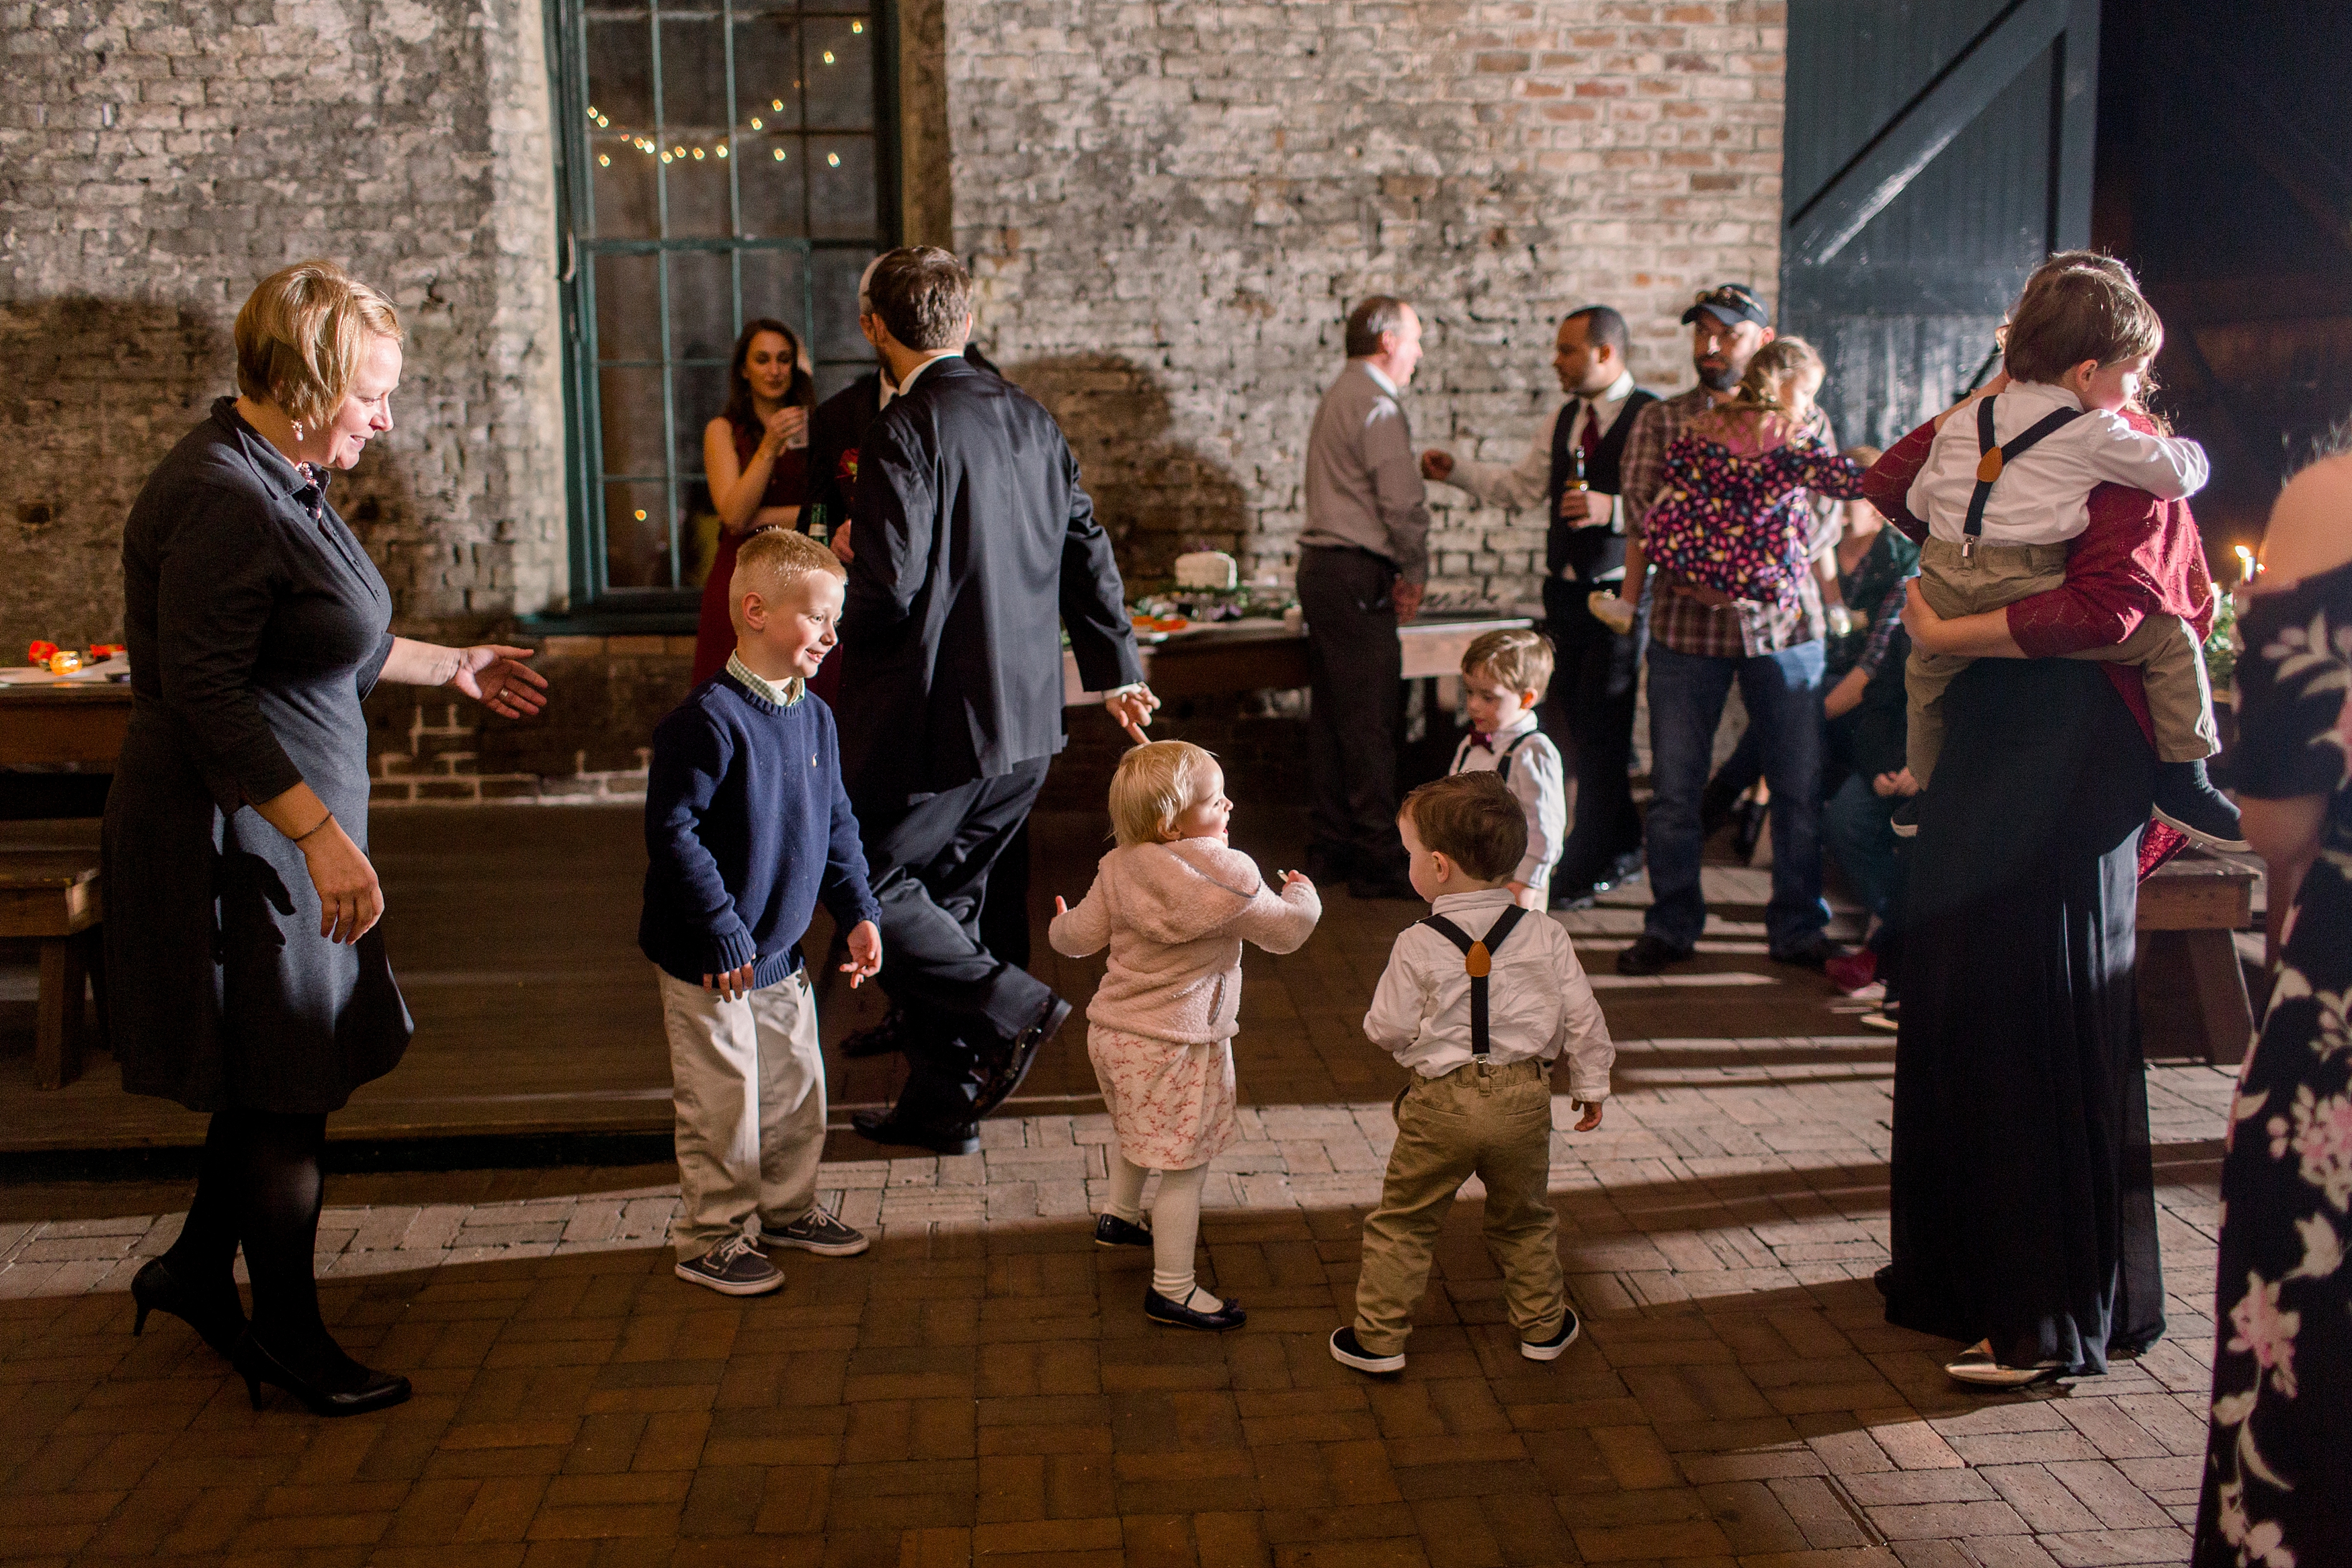 Little kids dancing at wedding reception.